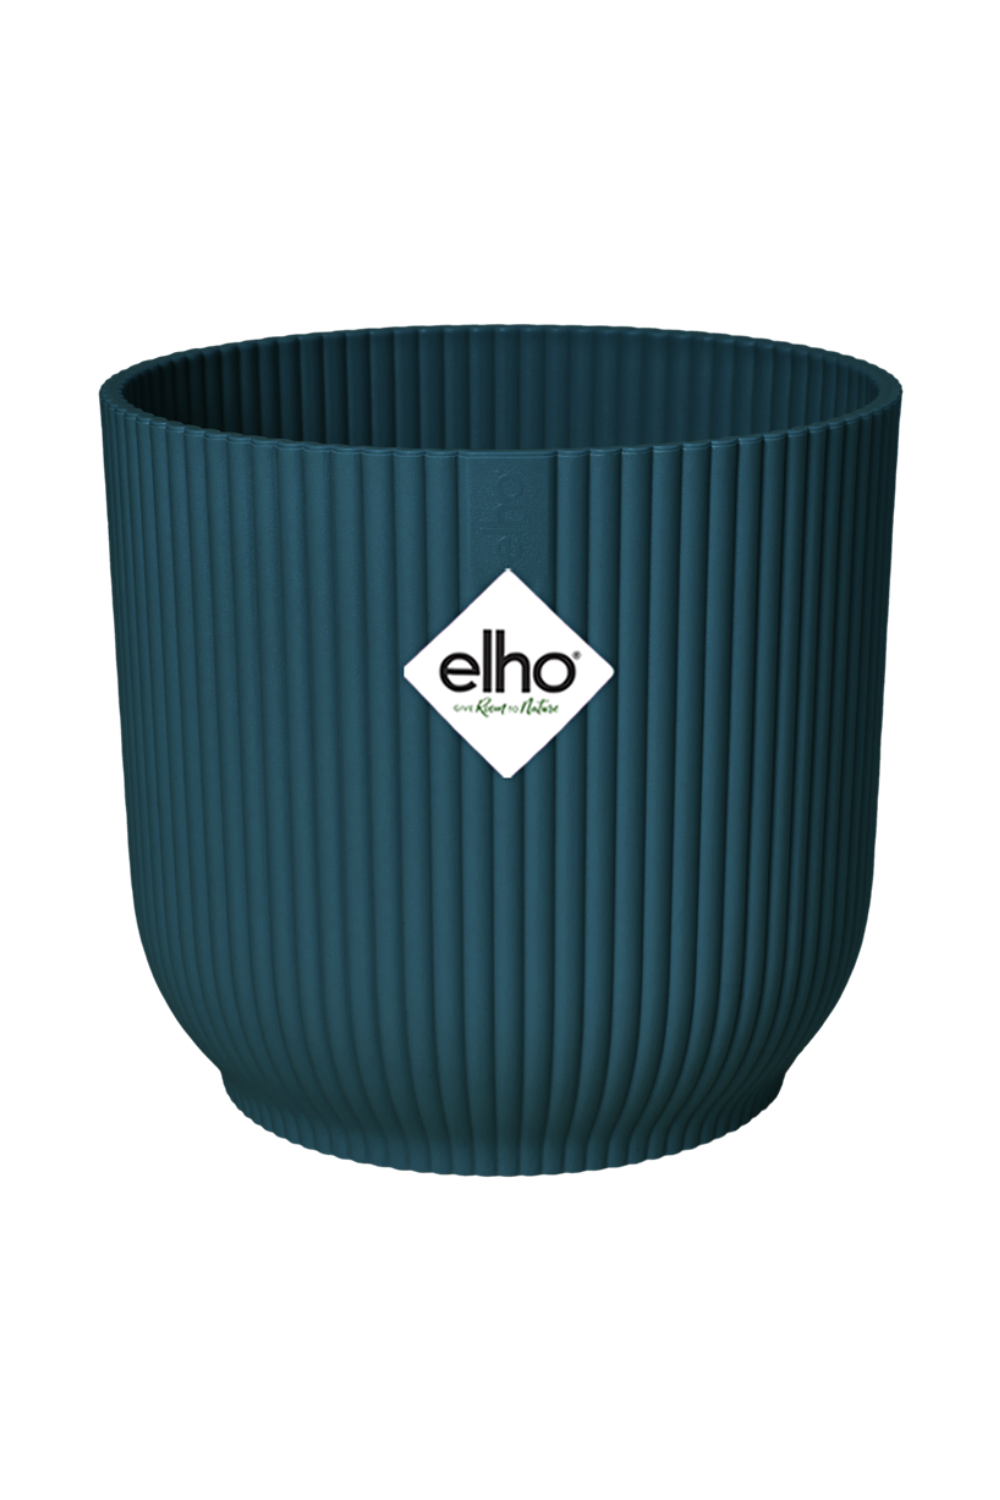 Blumentopf Elho Vibes Fold rund Deep Blue 18cm